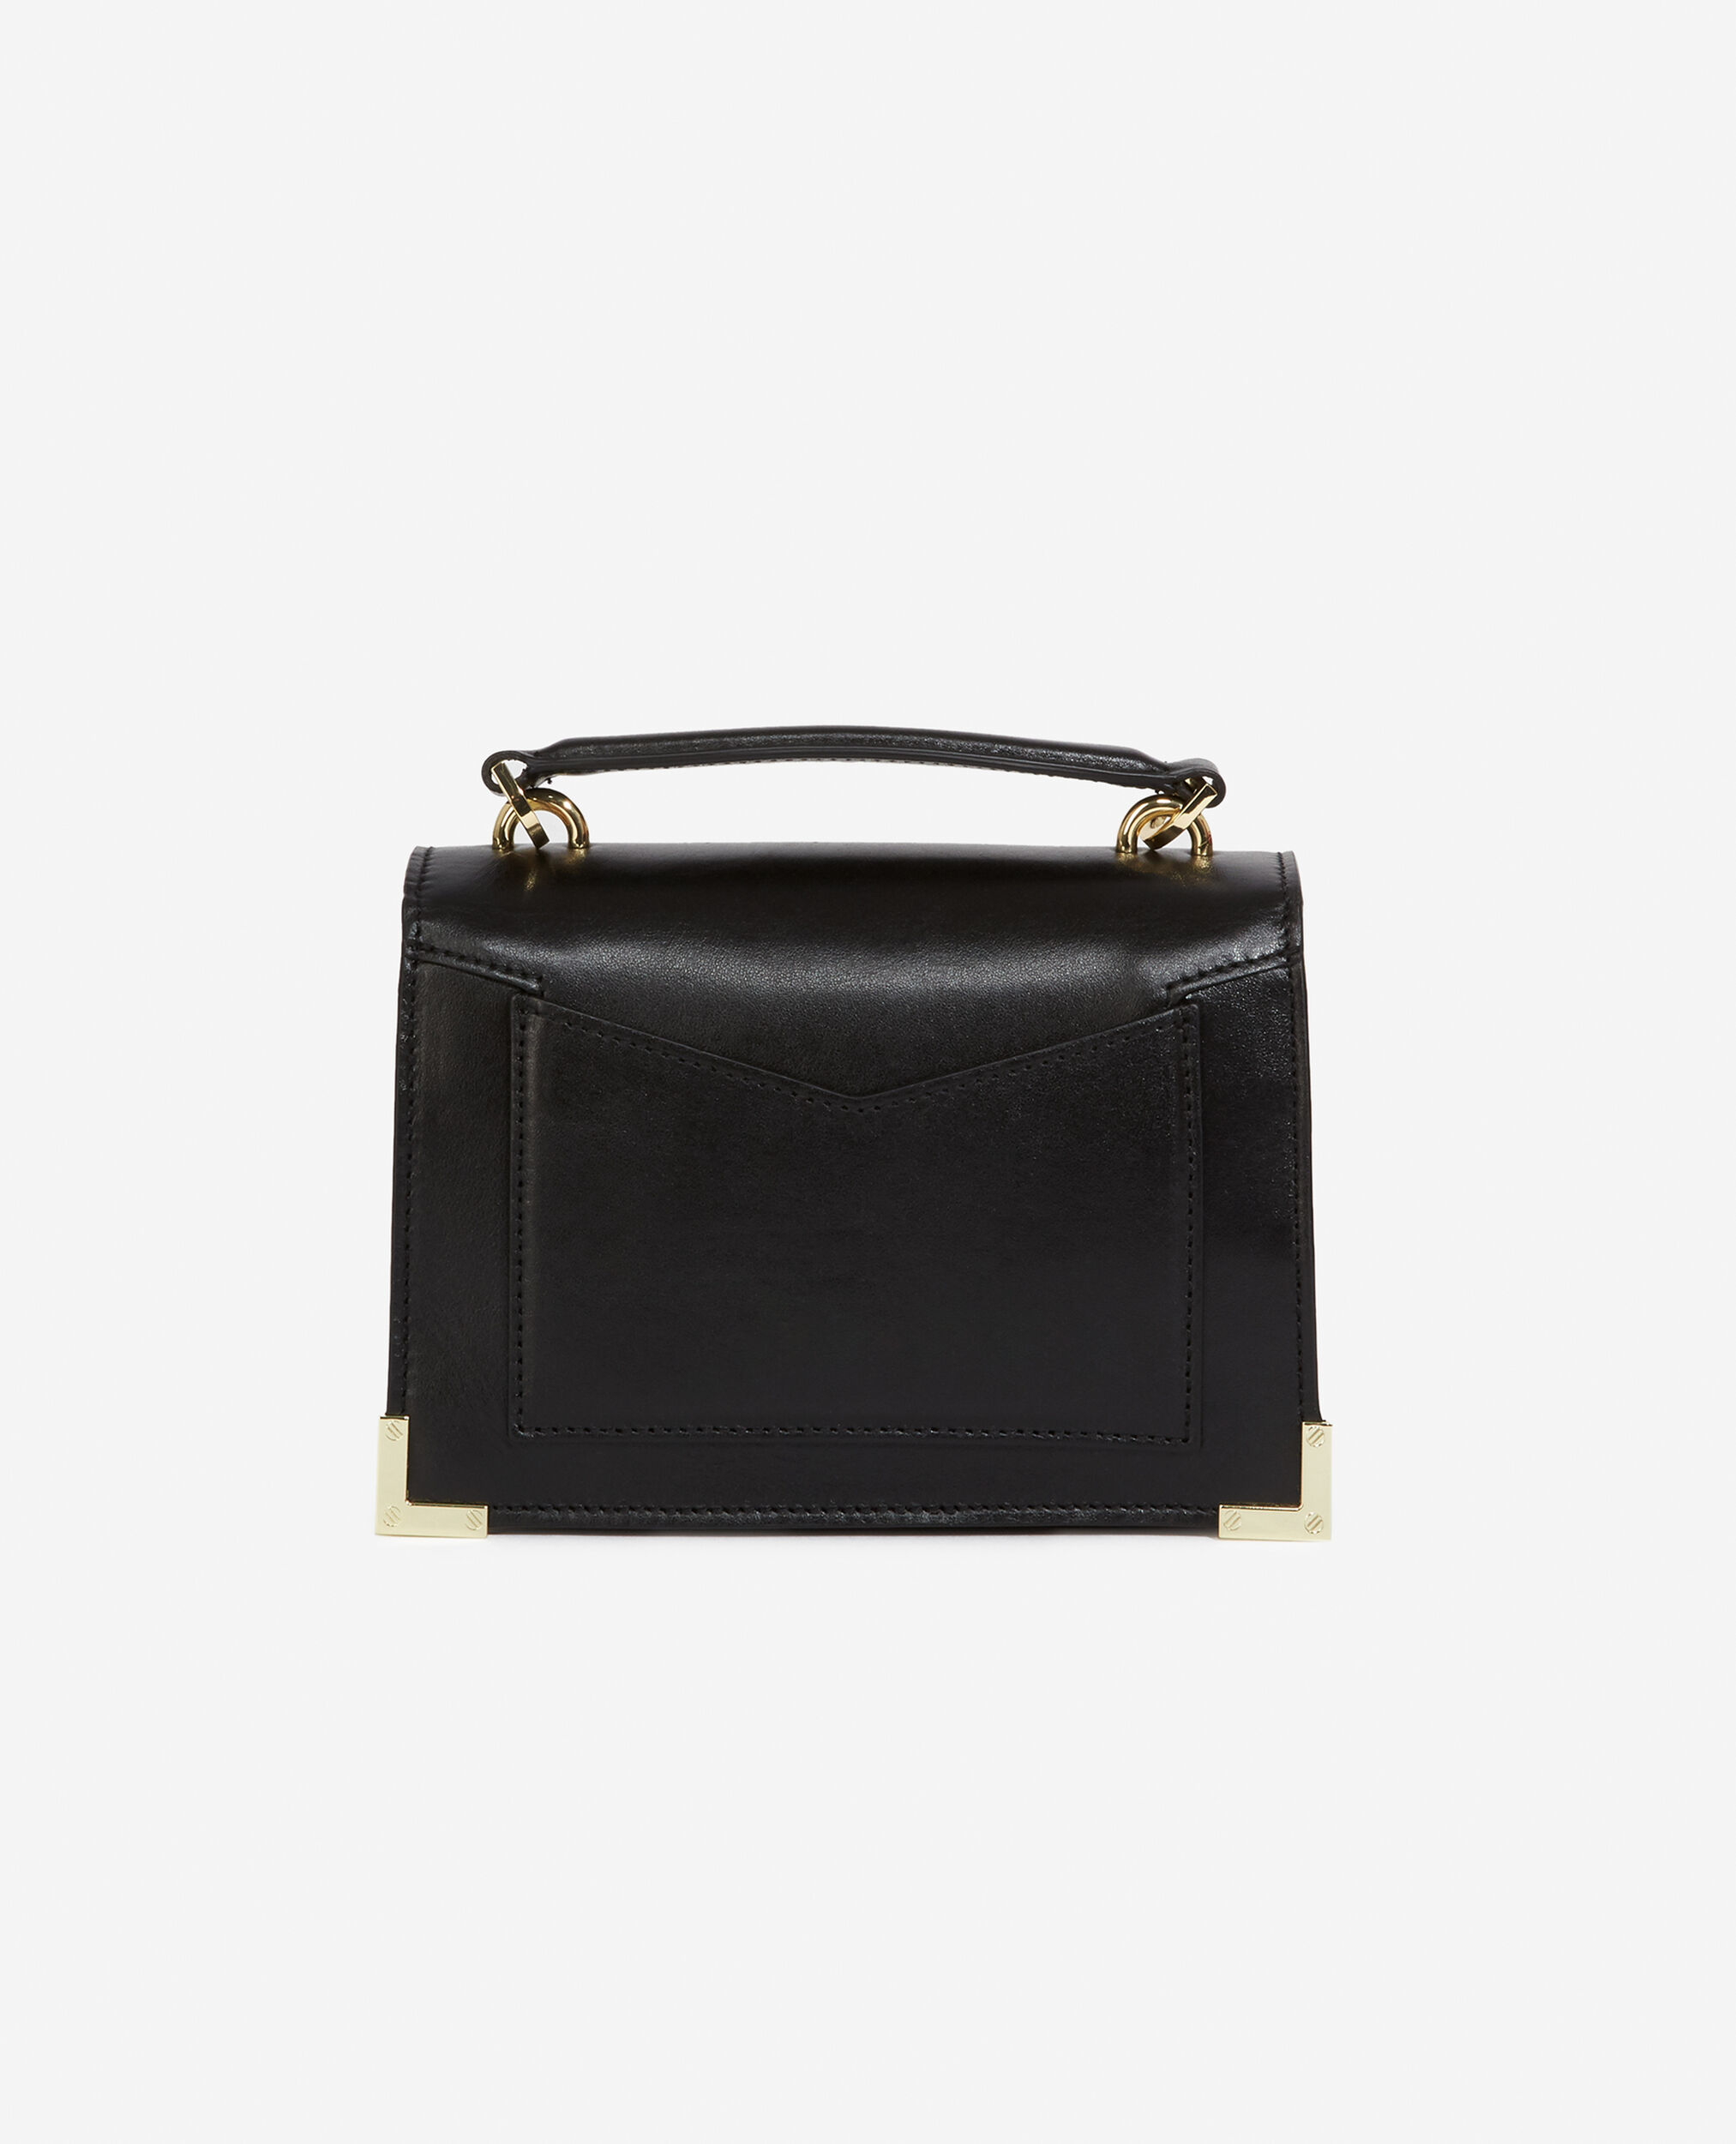 Small black leather handbag with gold details, BLACK, hi-res image number null